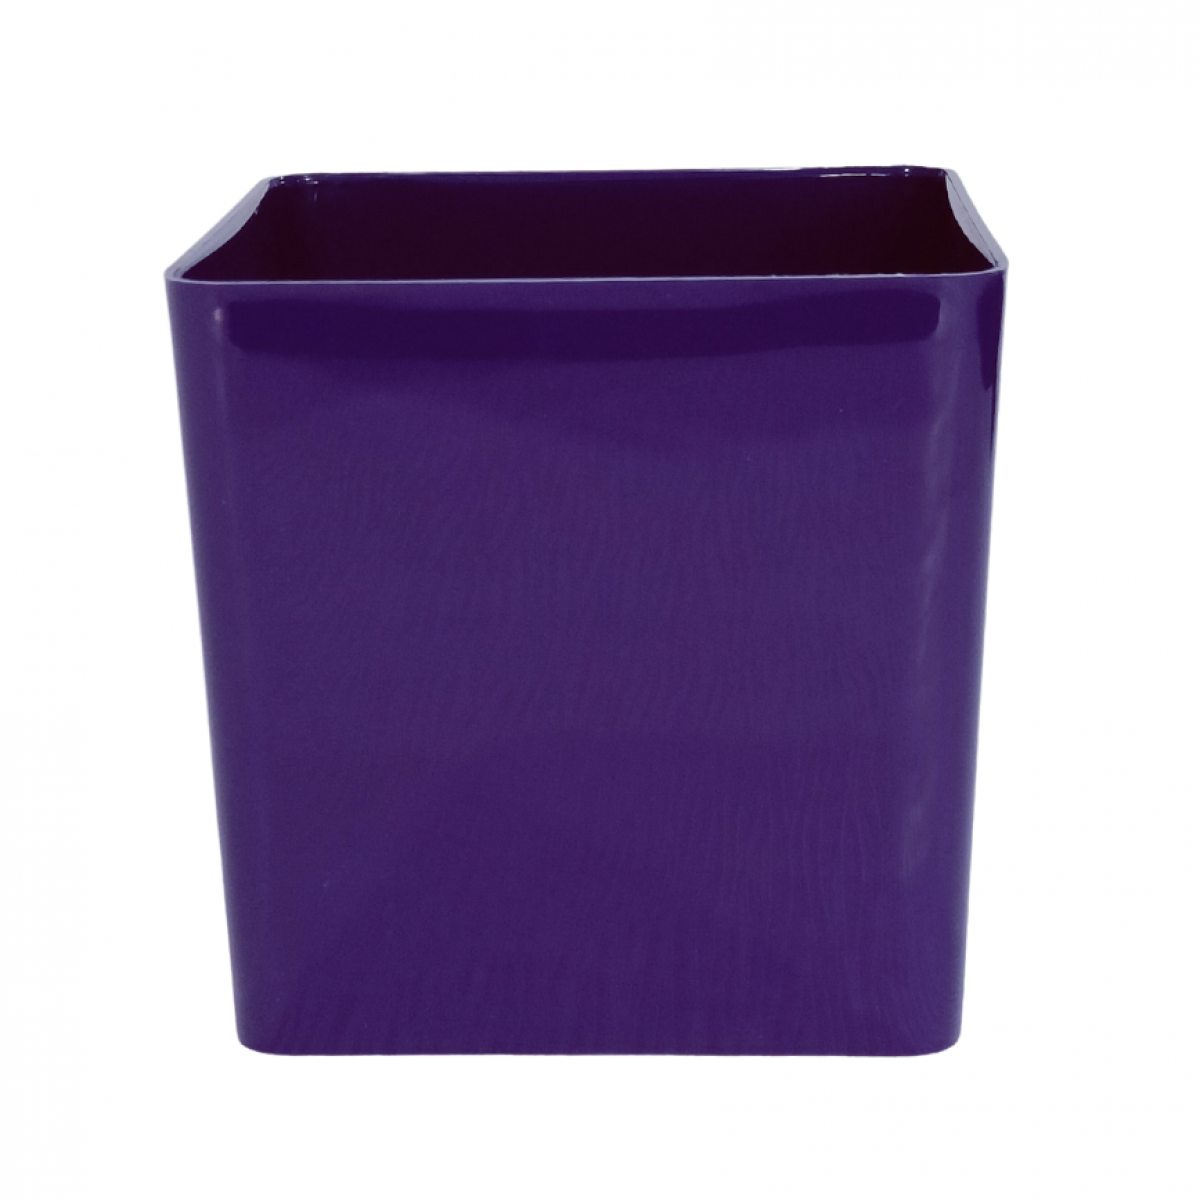 5152 Cube Purple 13x13x13cm Acrylic Vase - 1 No